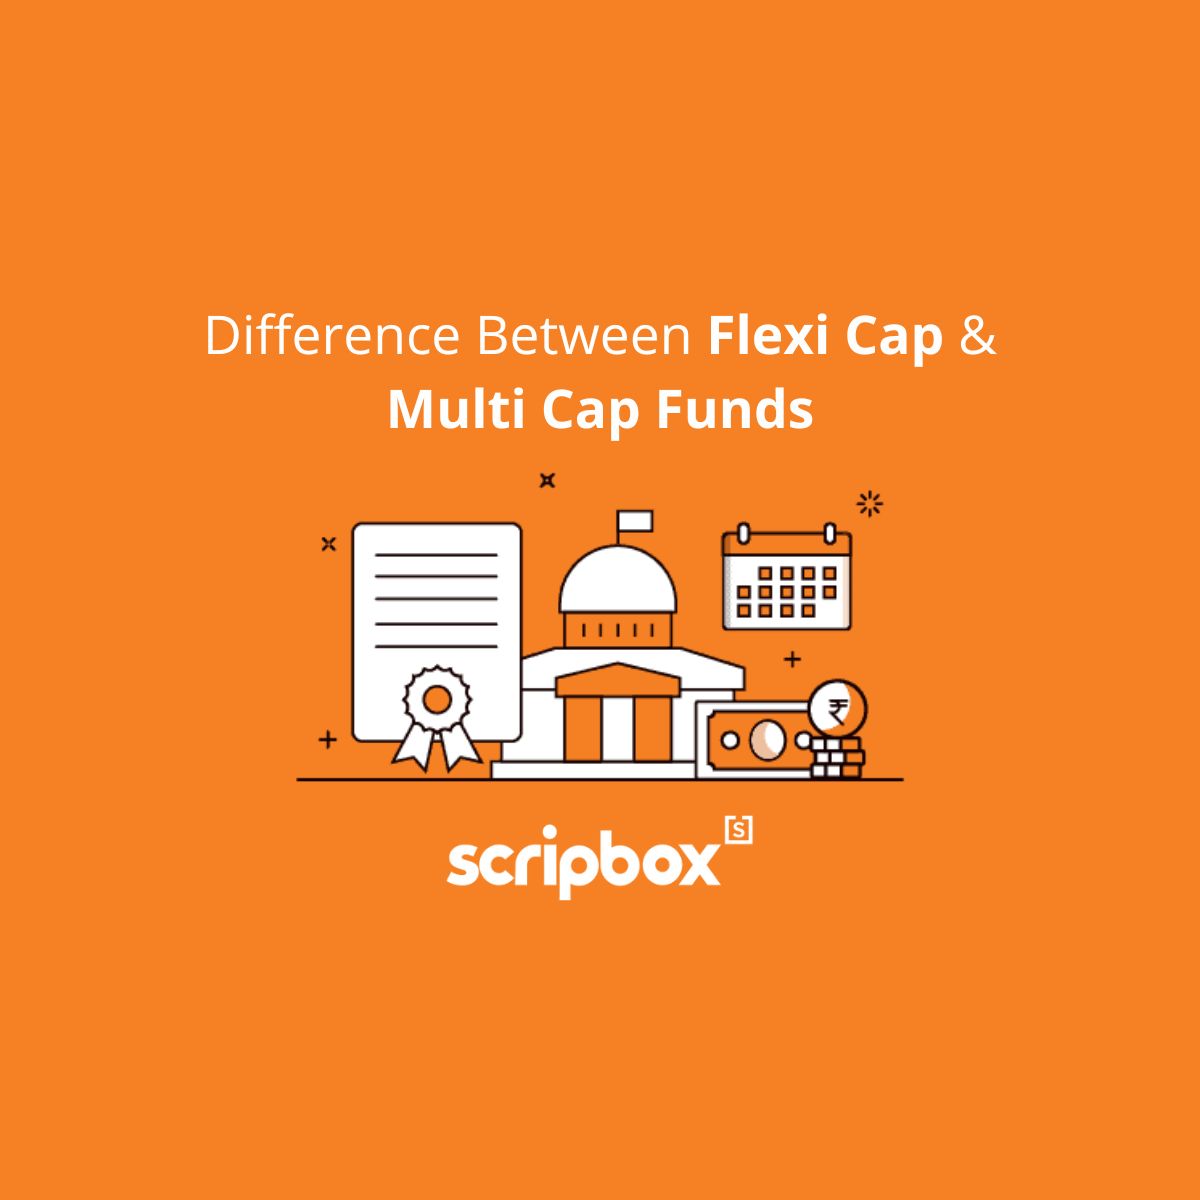 flexi cap funds vs multi cap funds